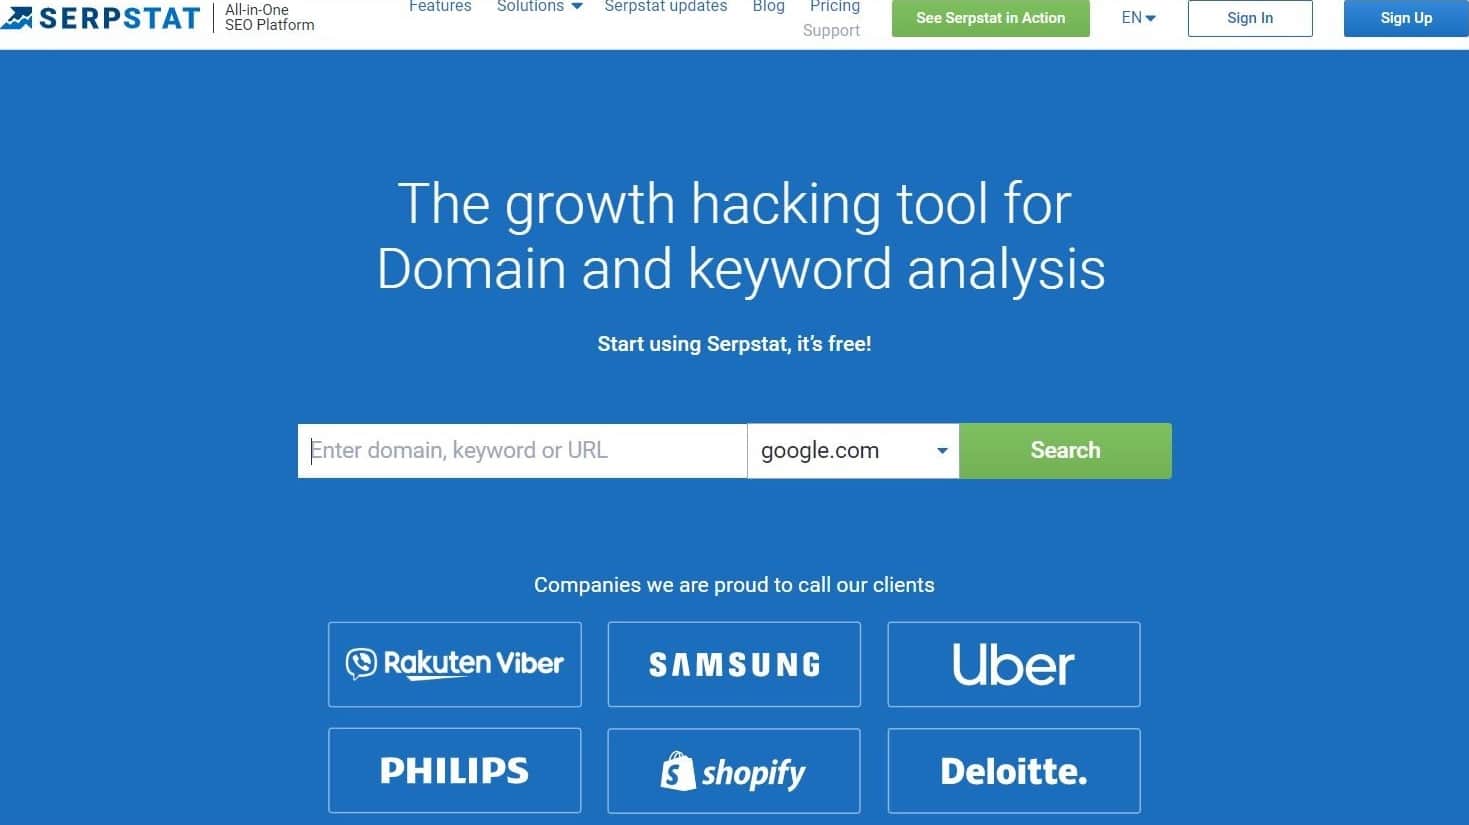 vSerpstat-hjemmesiden med en søgelinje og sloganet "The growth hacking tool for Domain and keyword analysis".